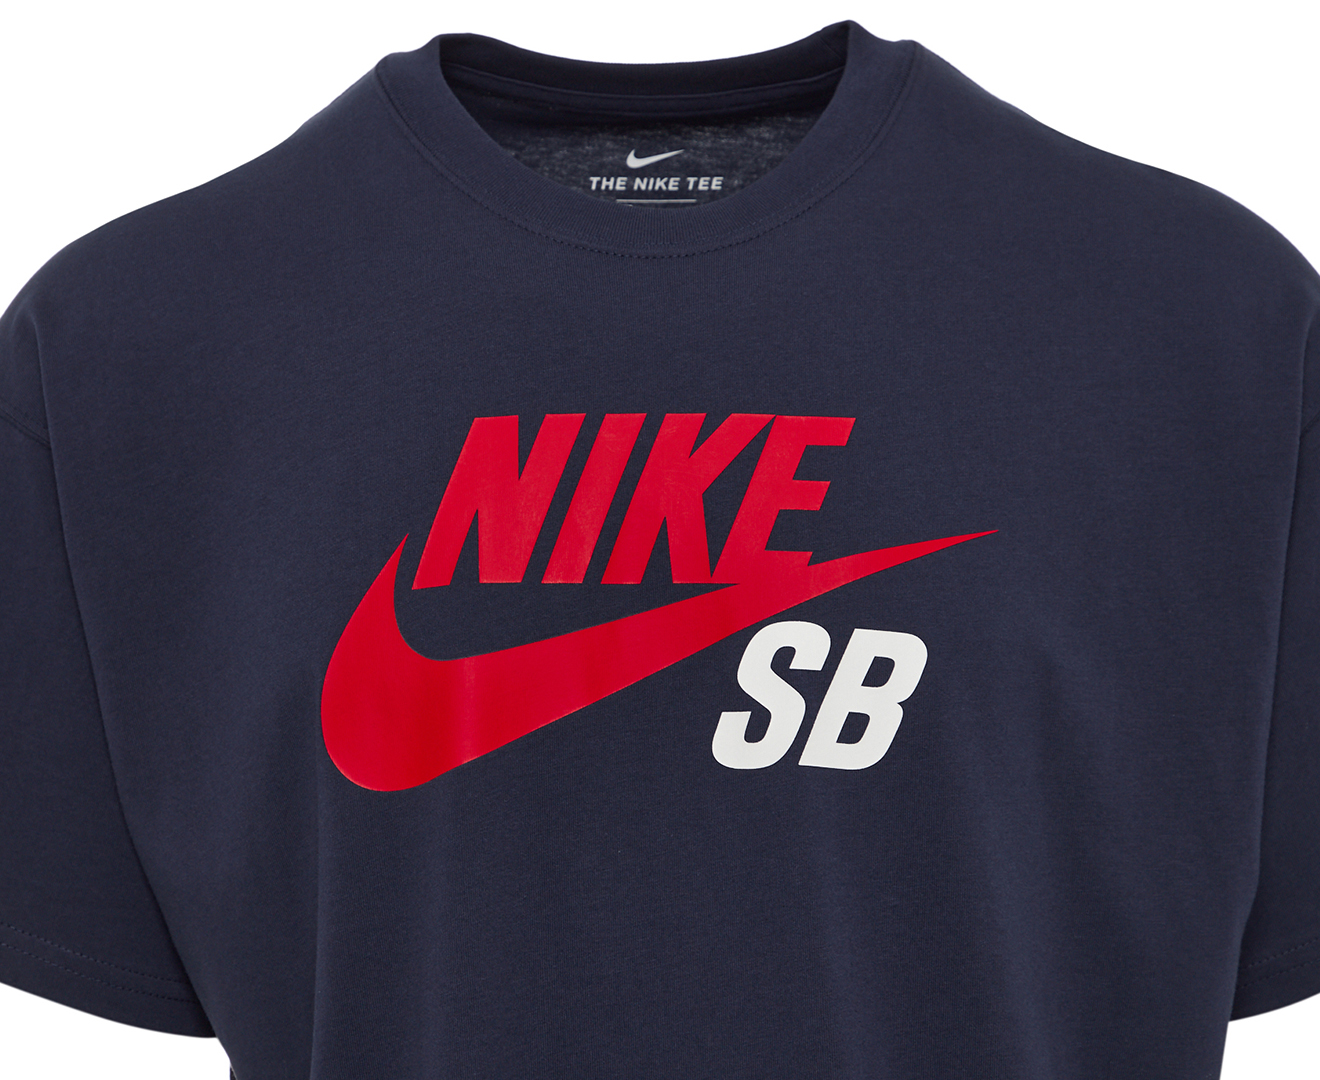 Nike SB Men's Logo Tee / T-Shirt / Tshirt - Midnight Navy | Catch.com.au